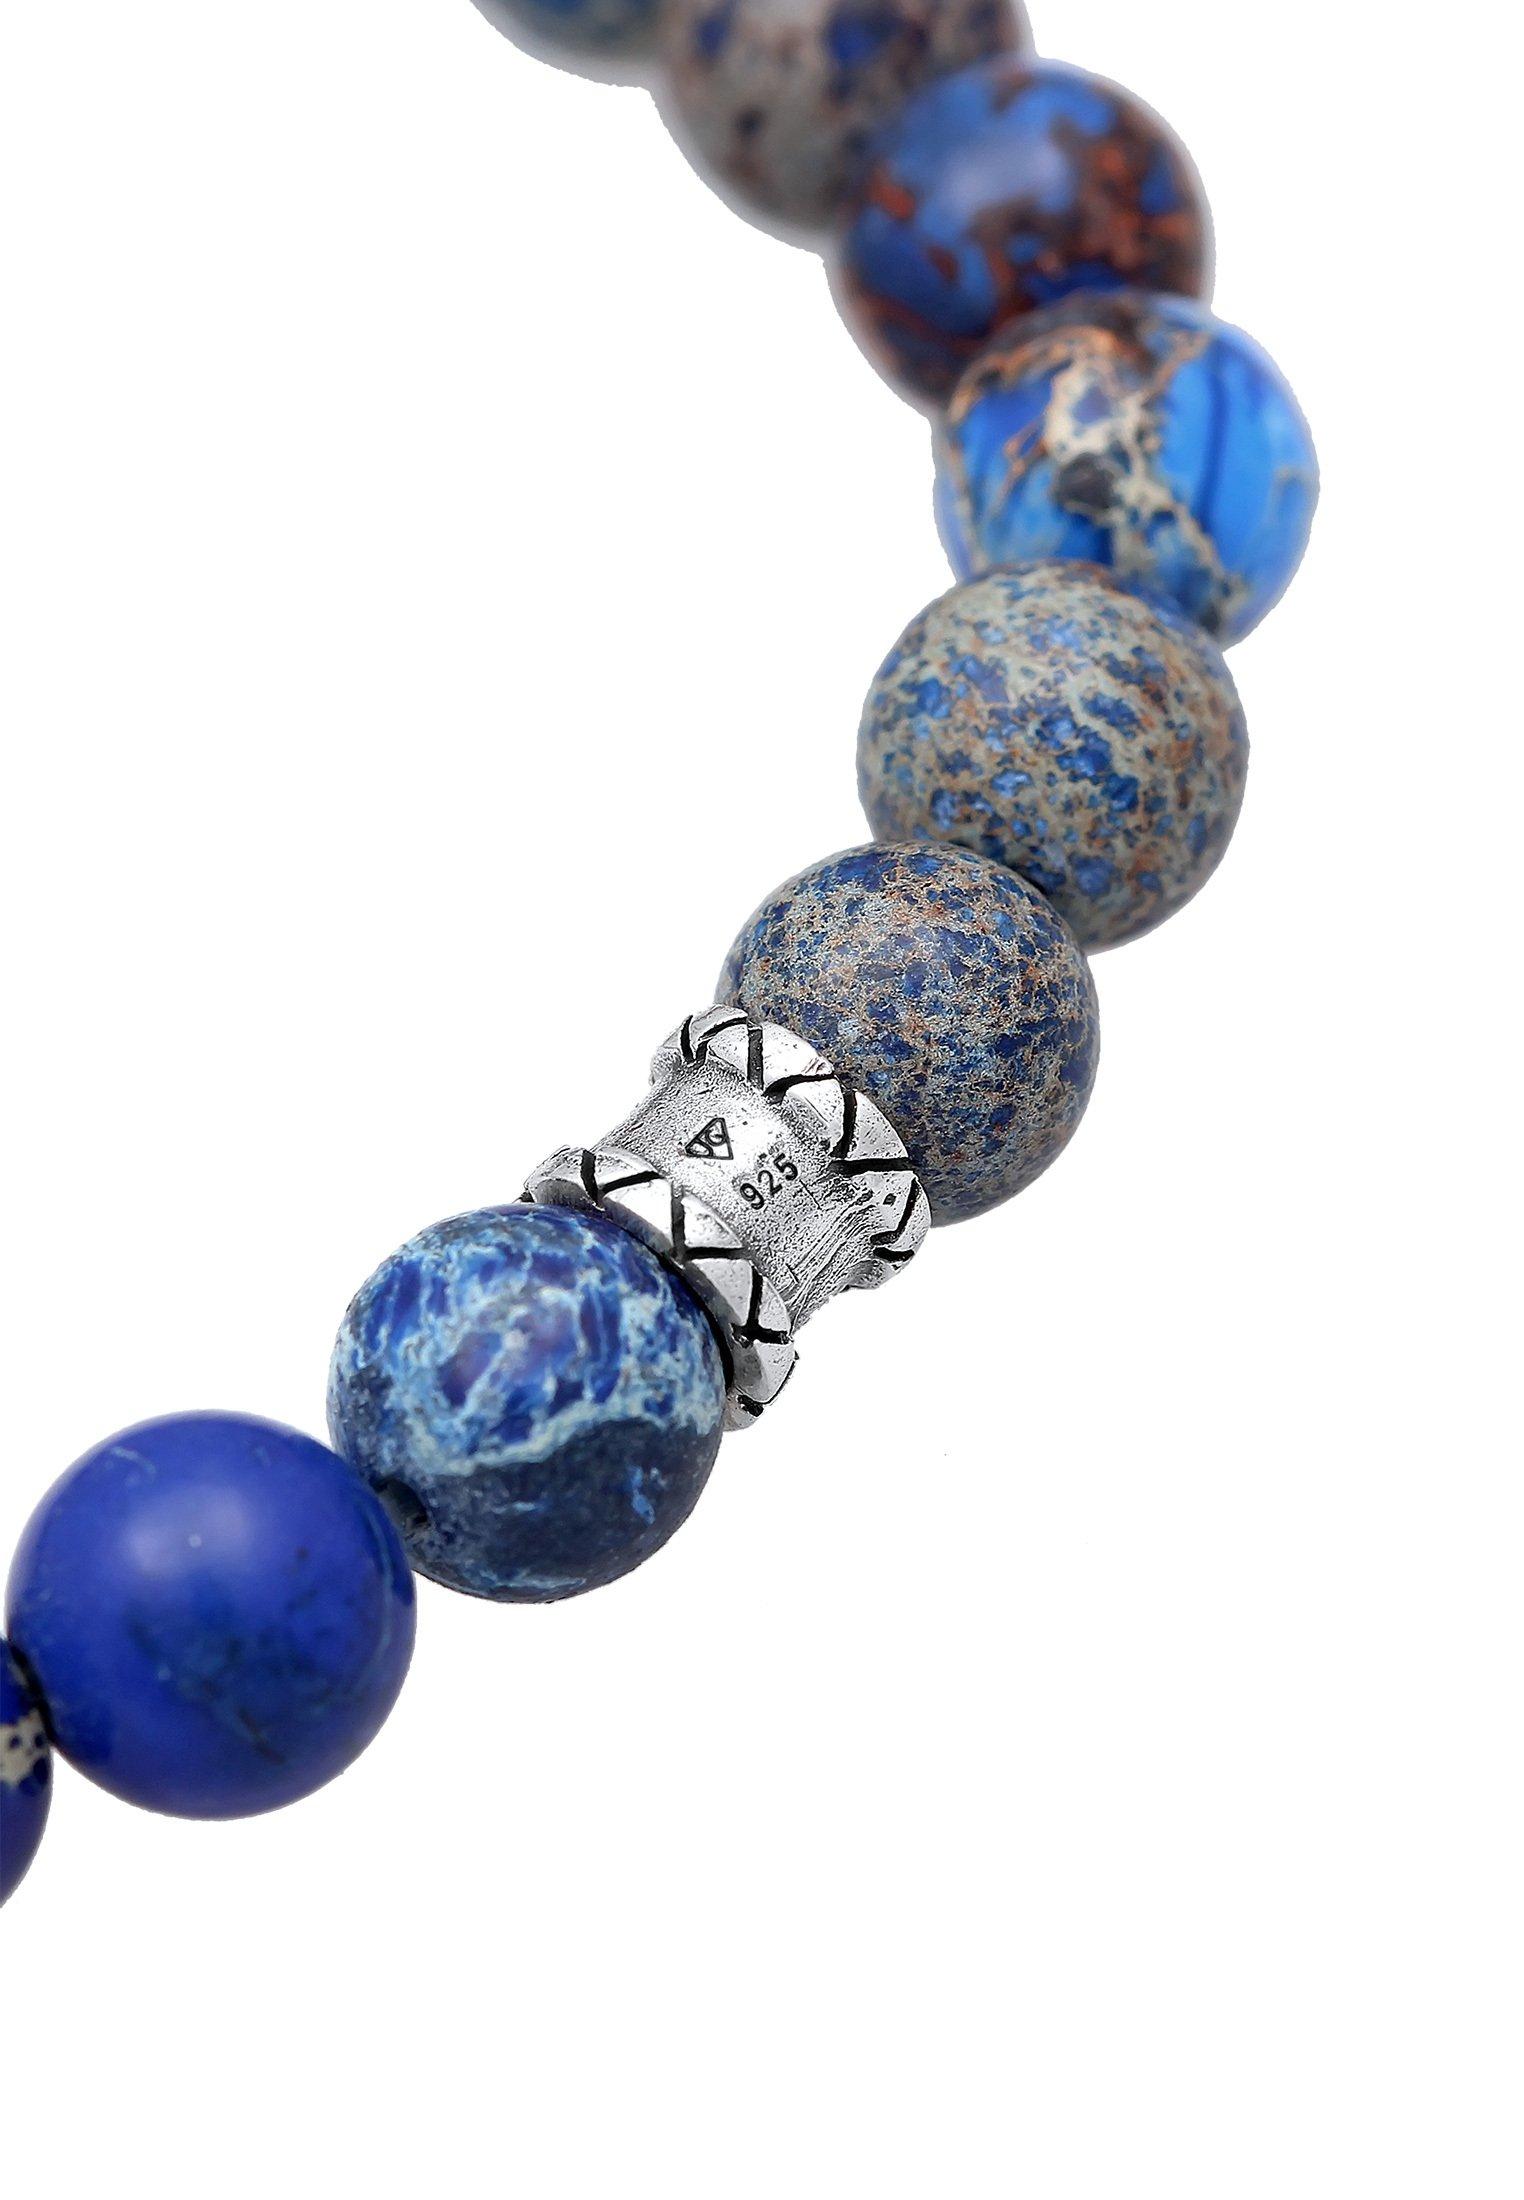 Kuzzoi  Armband  Achat Blau Beads Oxidiert 925Er Silber 